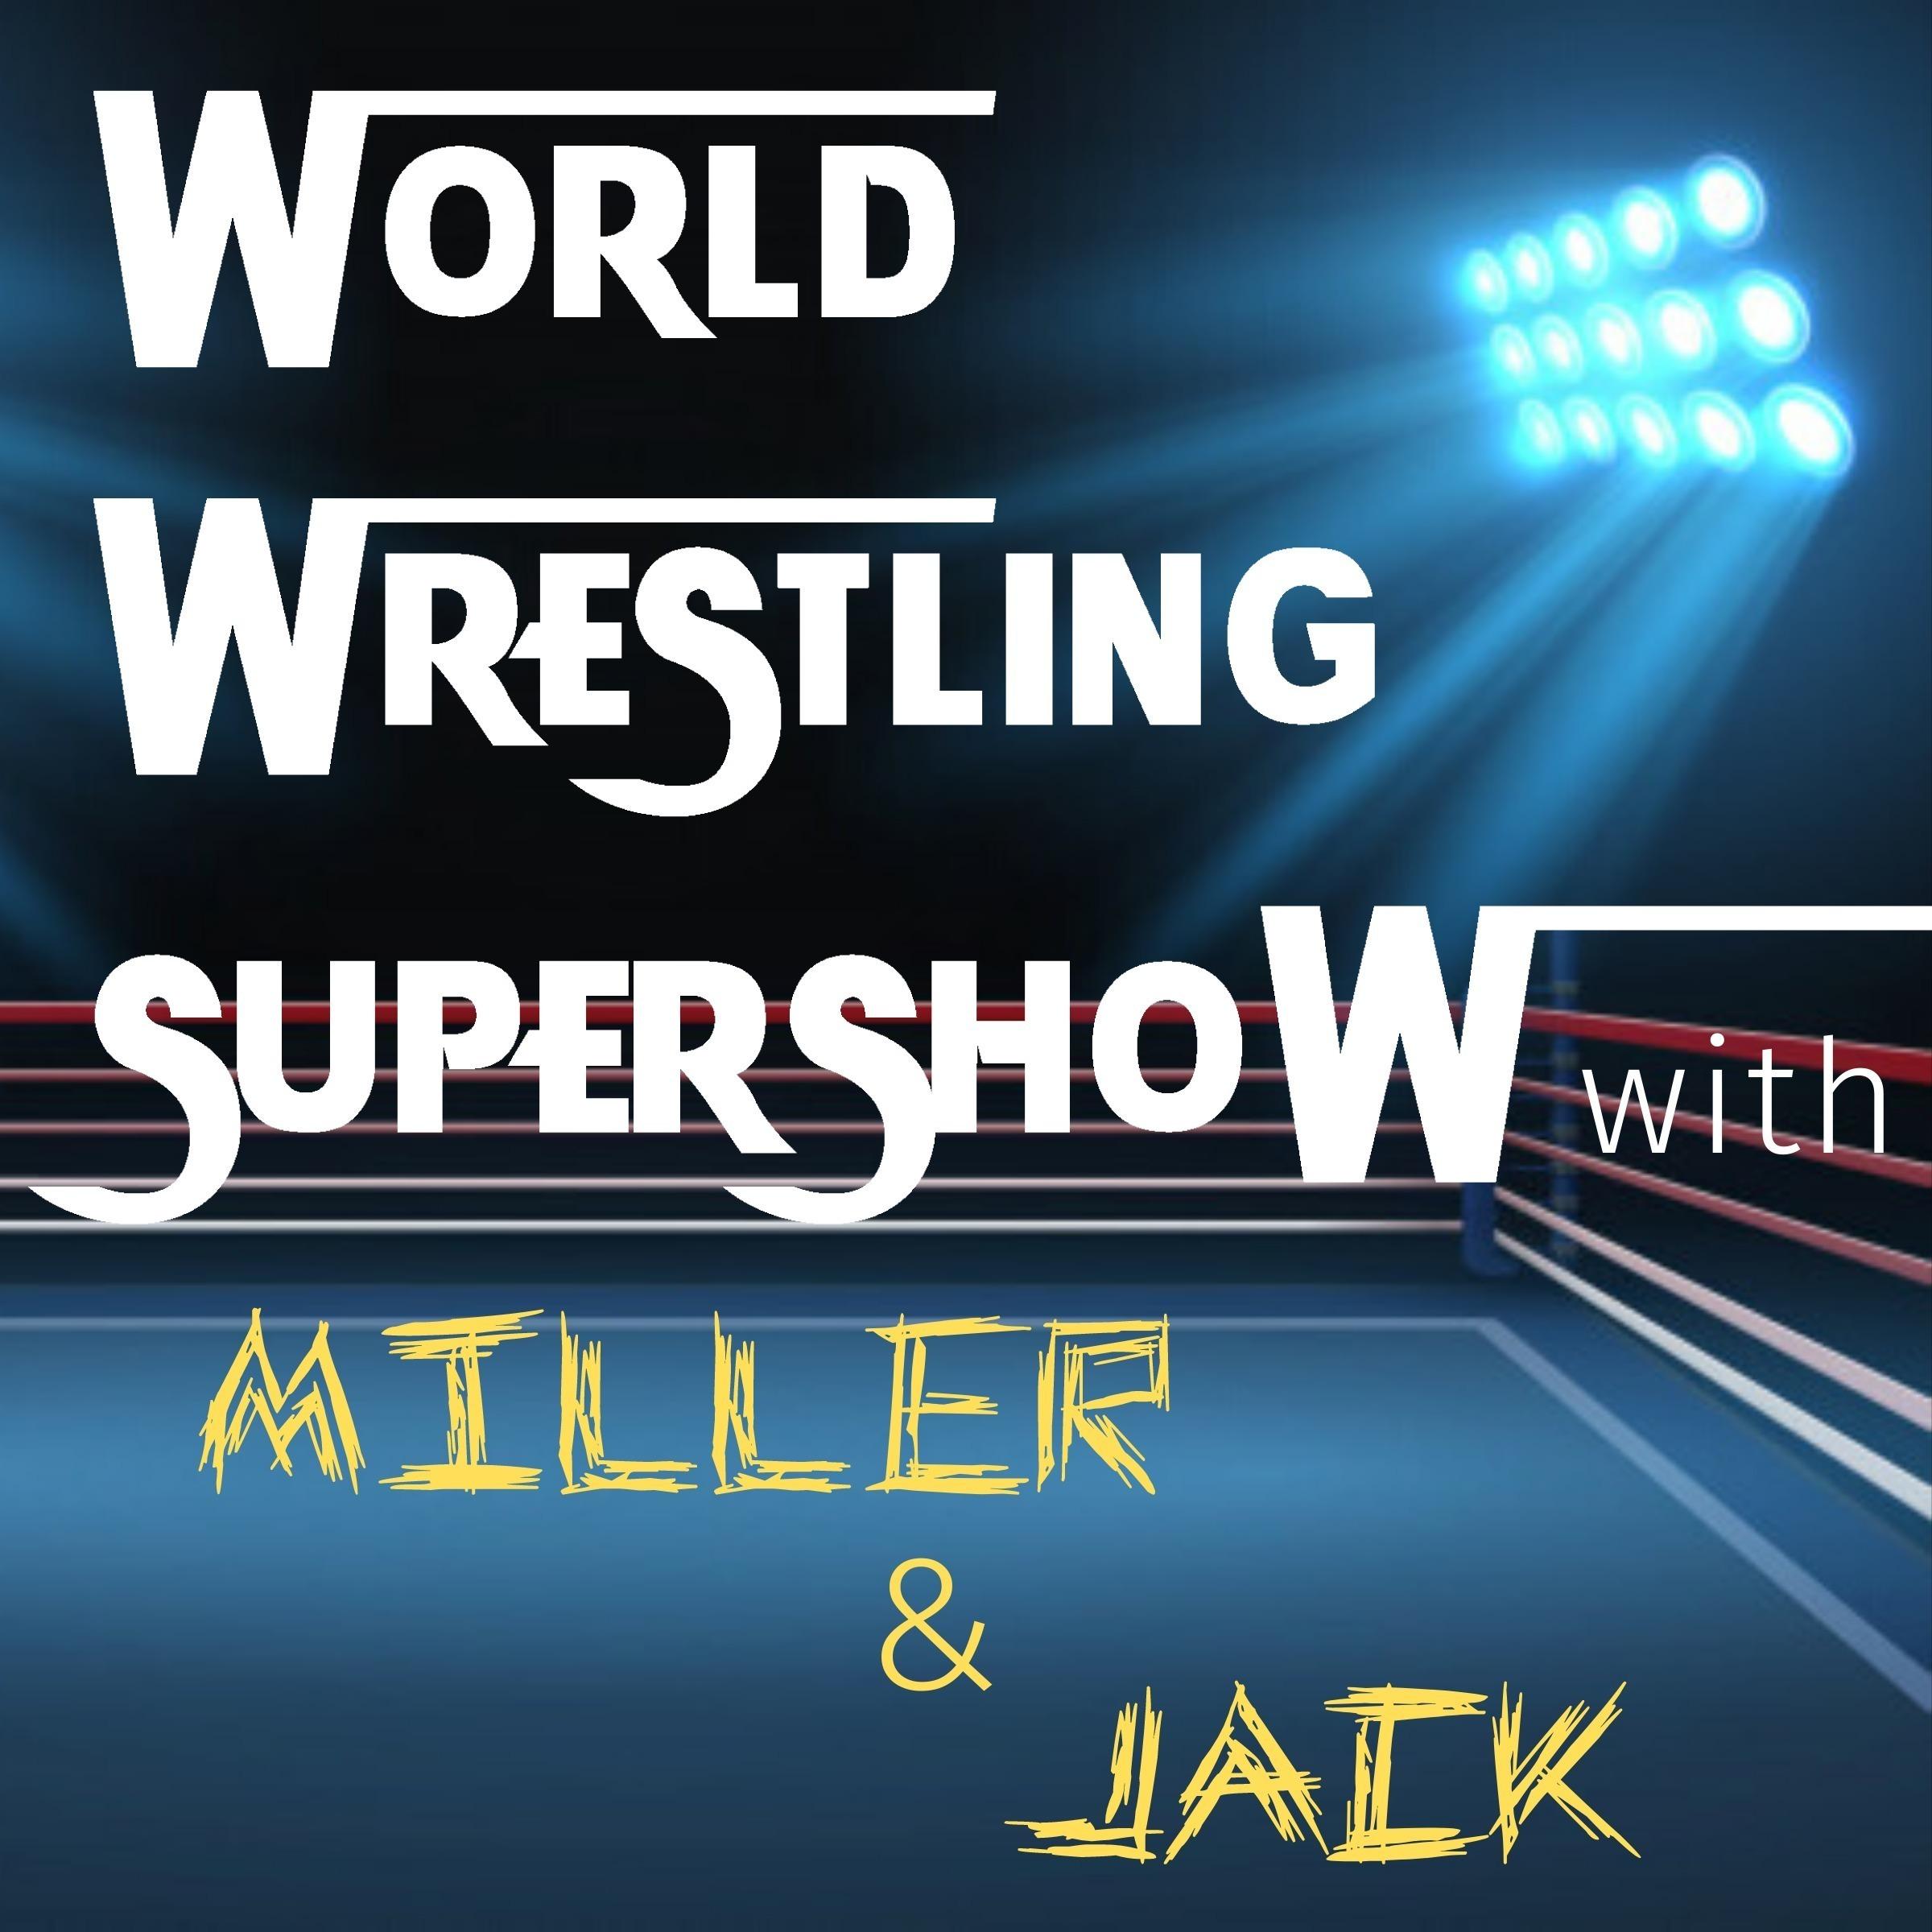 World Wrestling Supershow with Miller and Jack